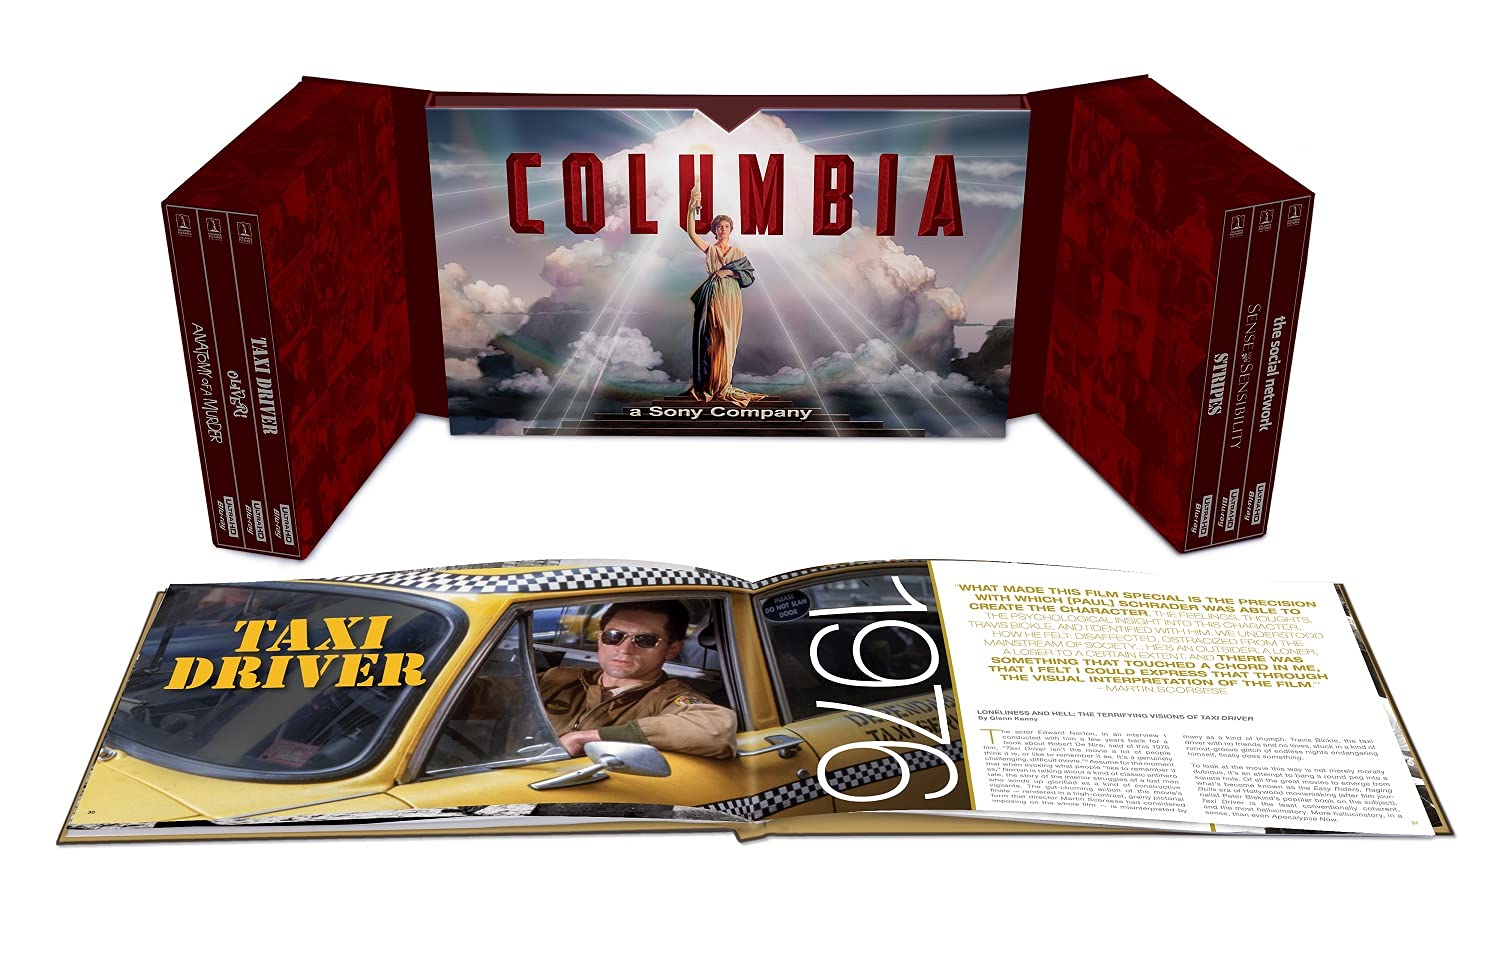 Columbia Classics Collection: Volume 2 (6 x 4K UHD + 8 x Blu-ray)